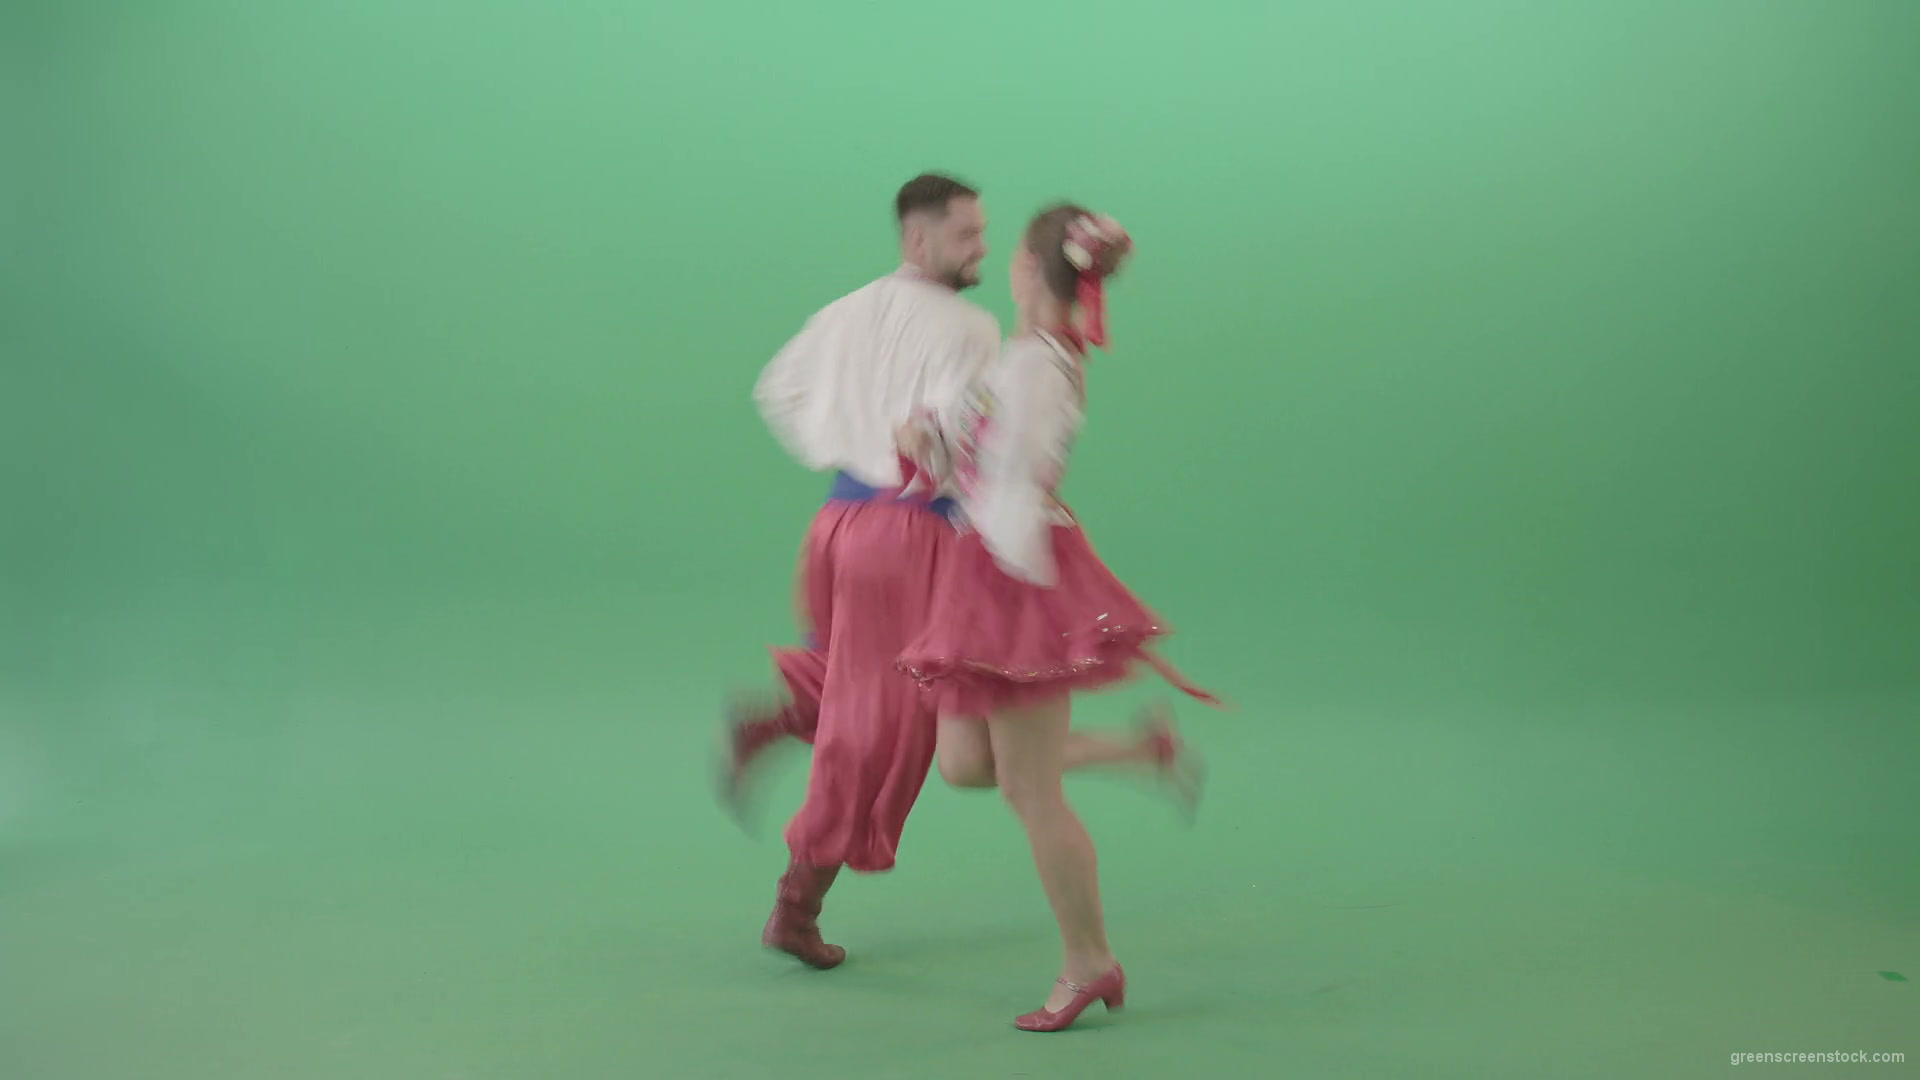 Ukraine-national-dancing-couple-shows-folk-dance-4K-Video-Footage-1920_007 Green Screen Stock